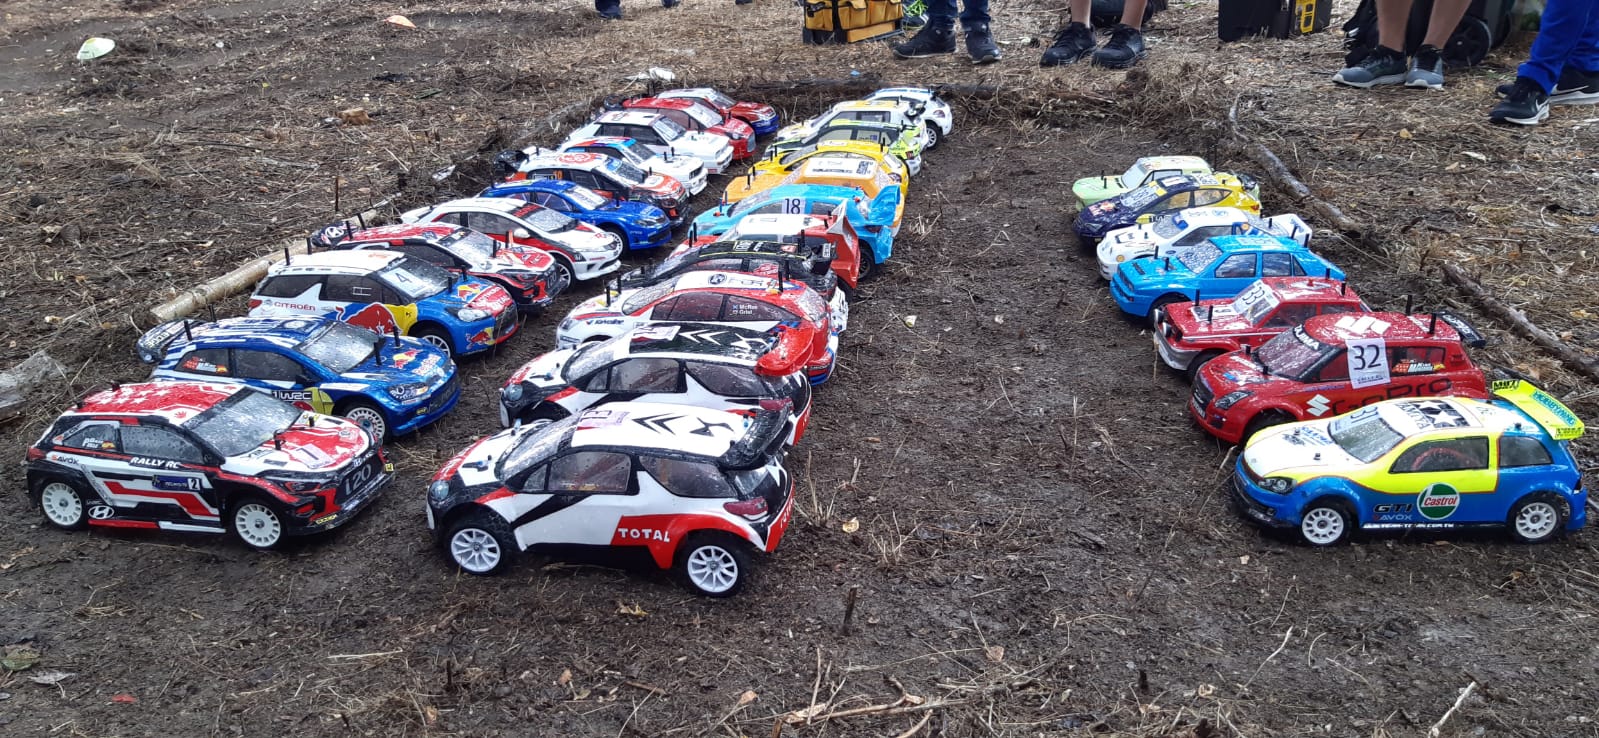 Rally Rc Italia 2021 - Parque cerrado